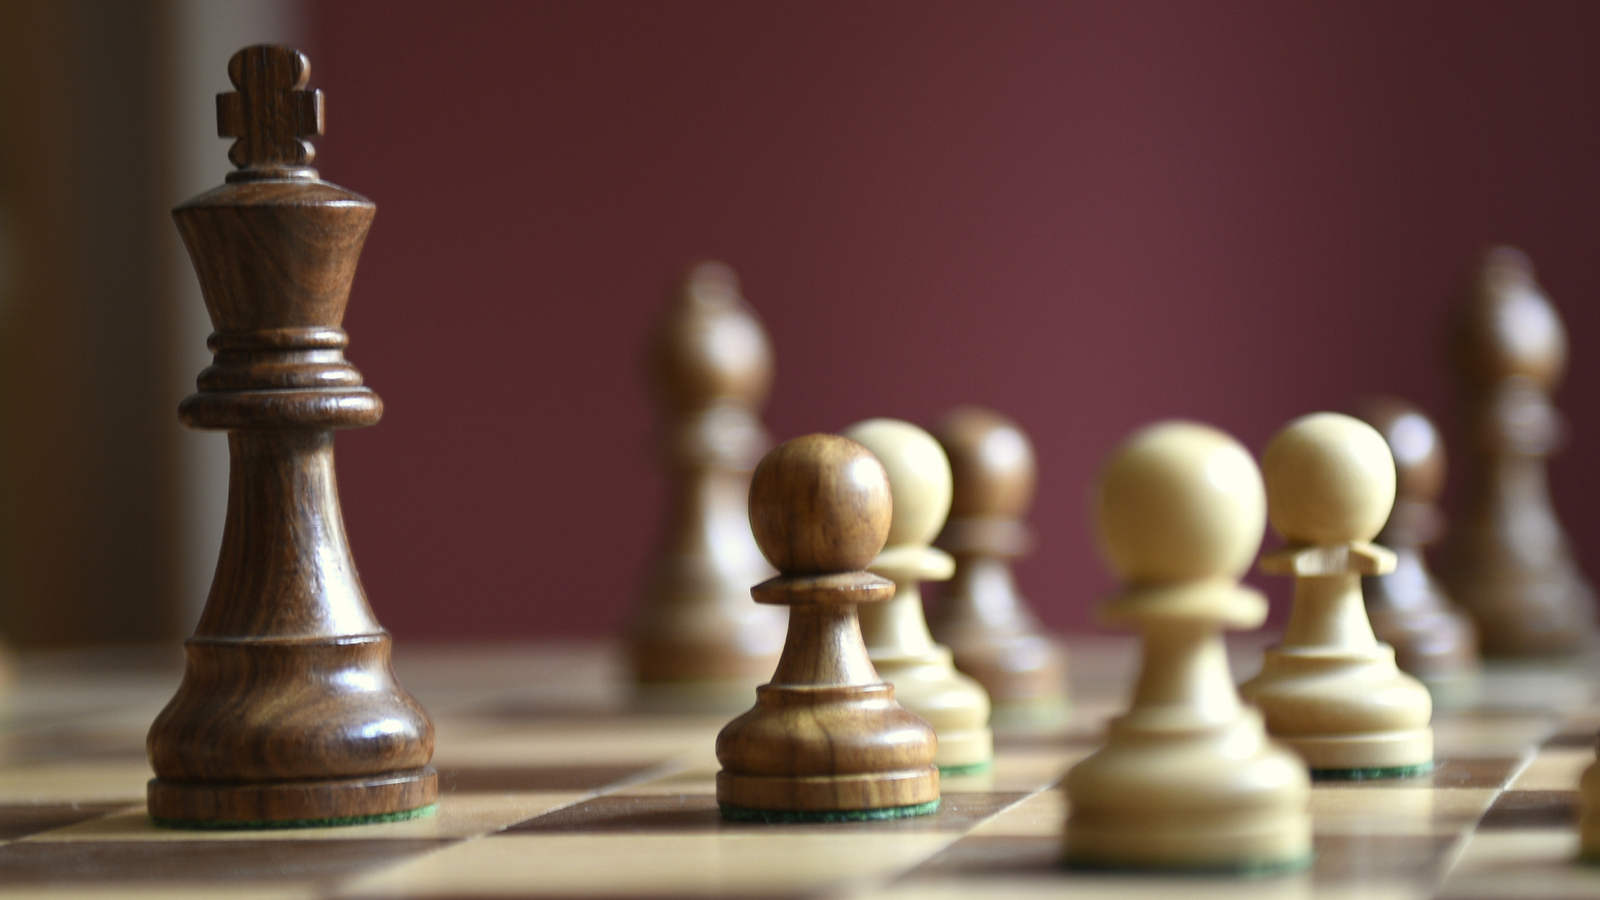 Magnus Carlsen Accuses Hans Niemann of Cheating at Chess, Sinquefield Cup